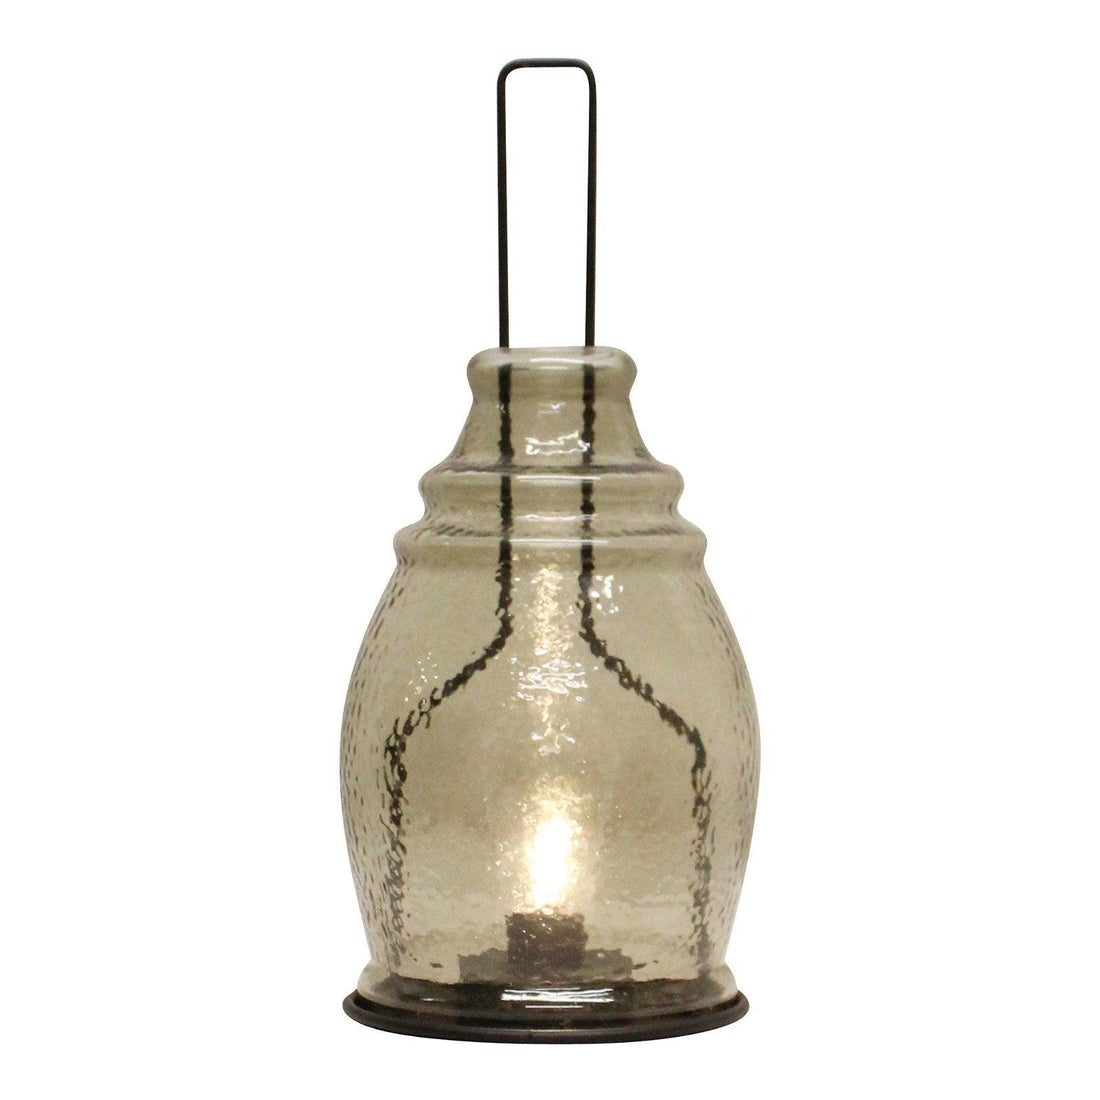 LED Glass Lantern, Grey & Black, 35x15cm. - £26.99 - LED Lighting 